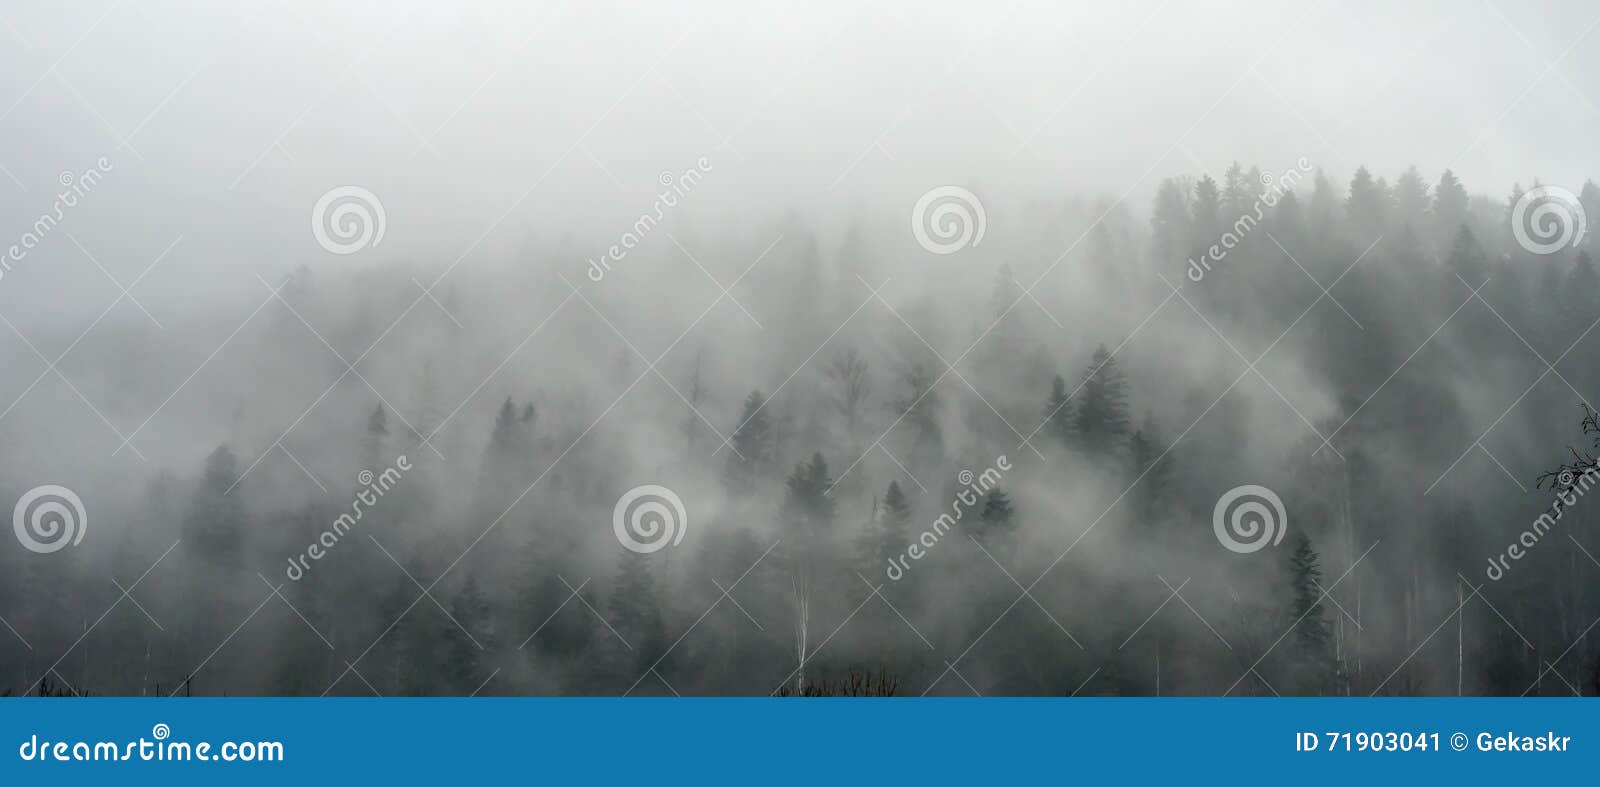 breathtaking panorama of pine wood in fog